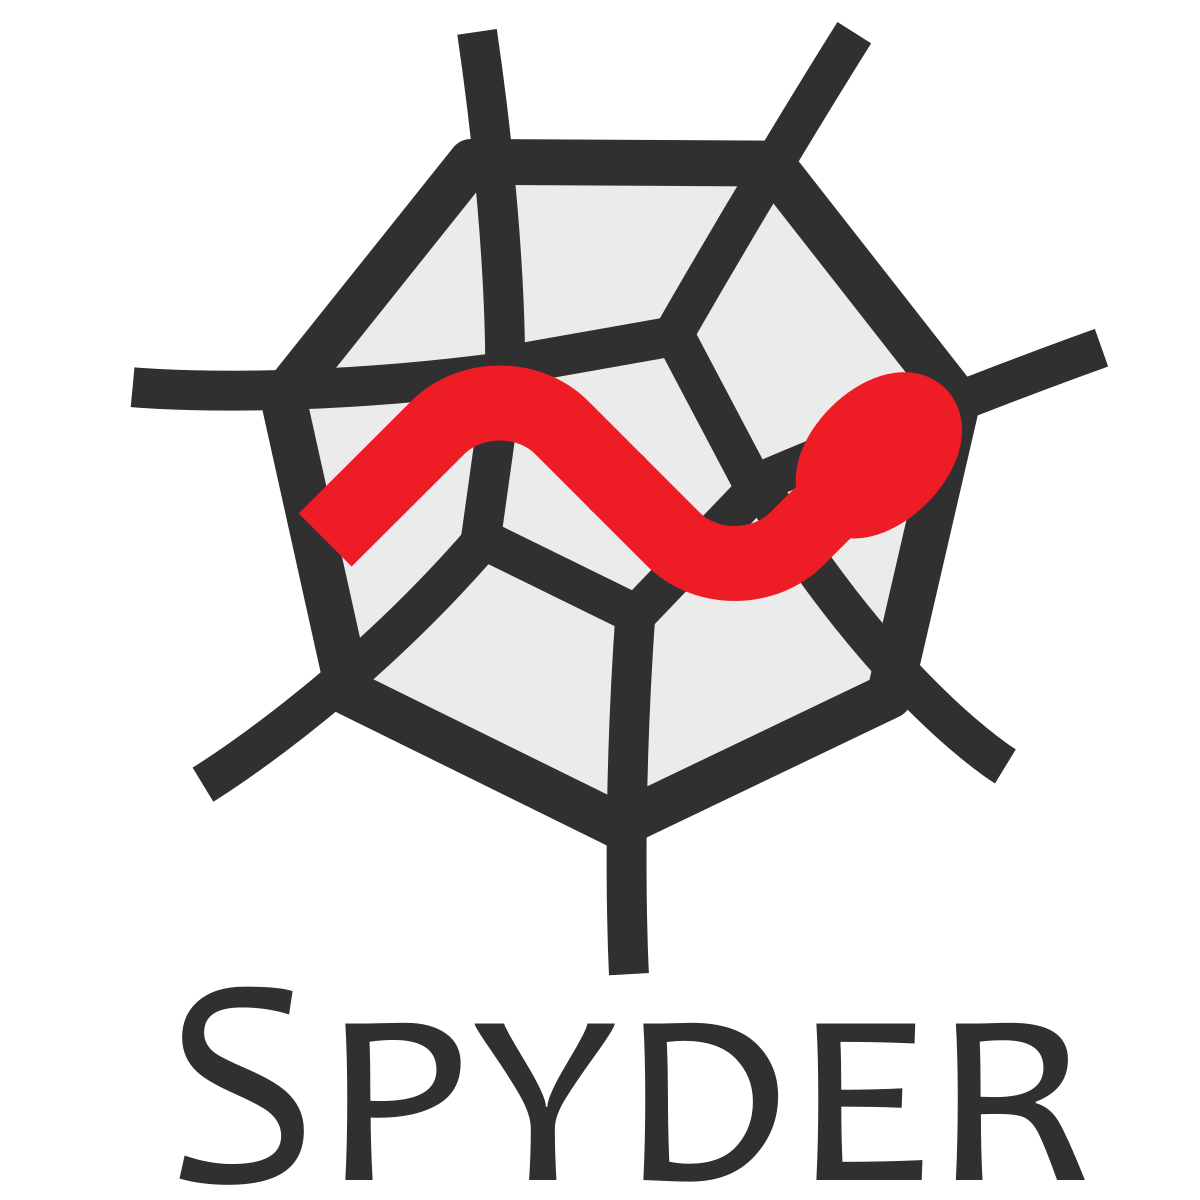 Spyder 4 express software download mac